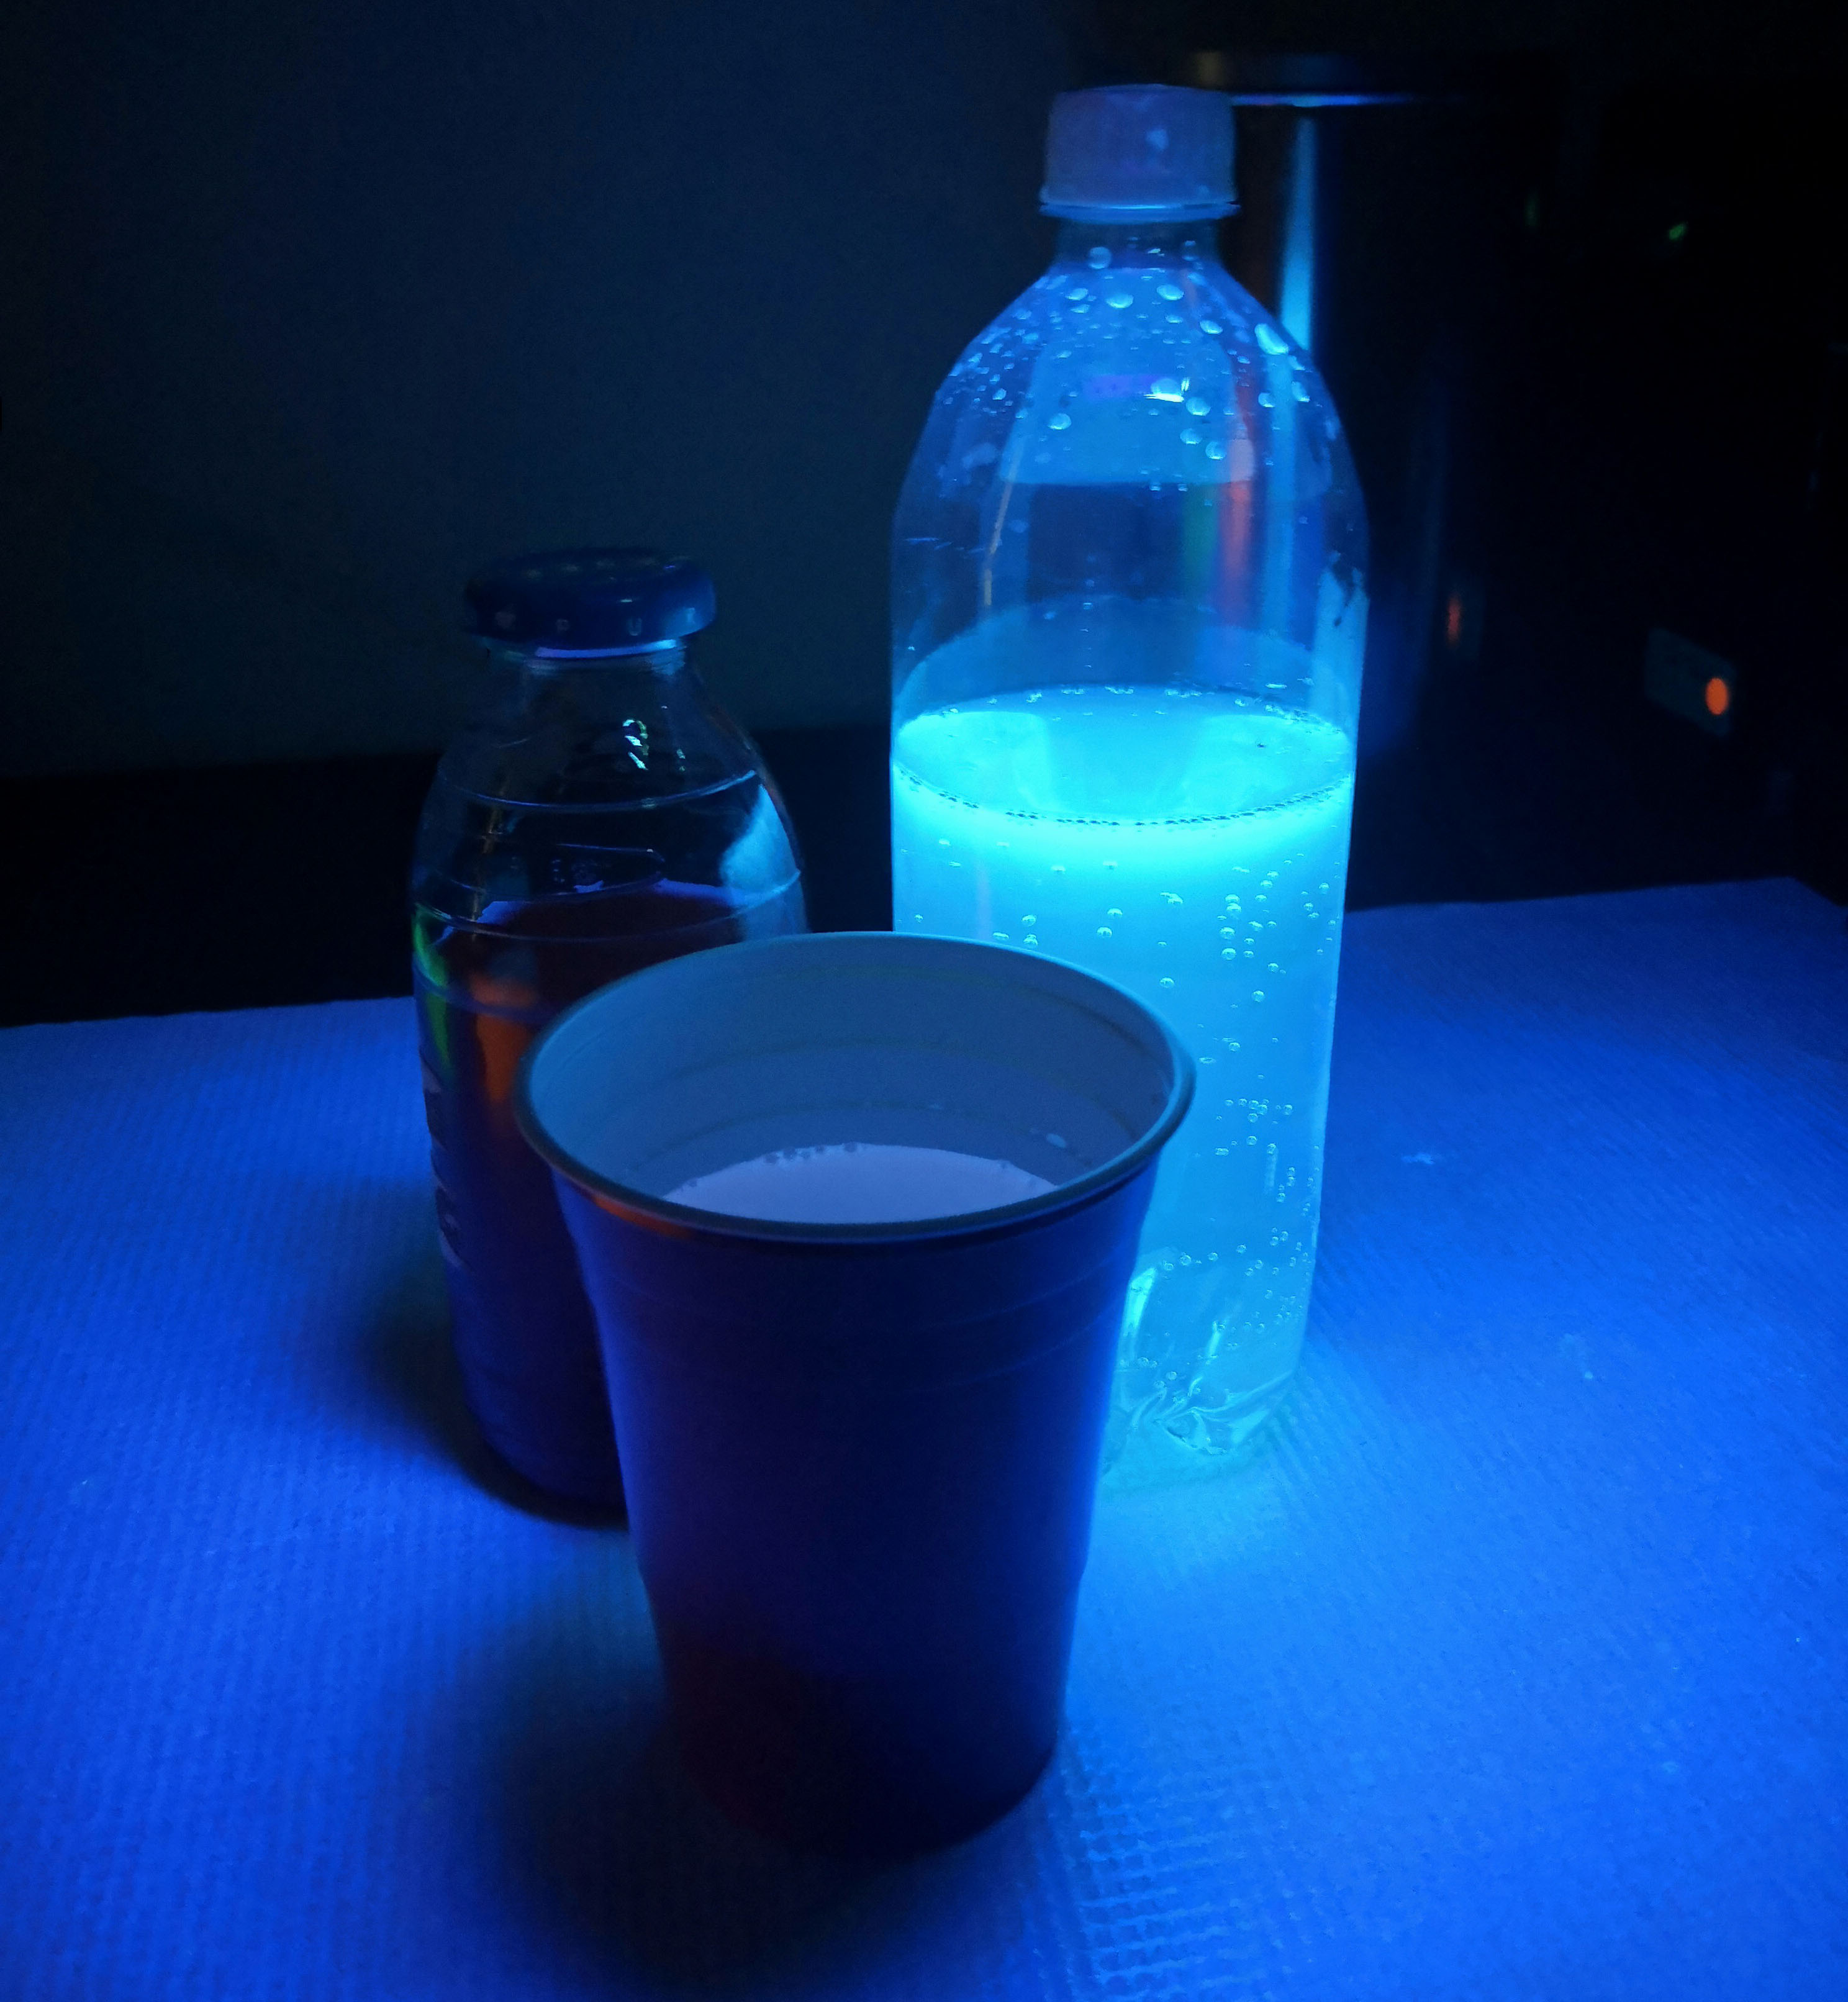 Make glowing drinks